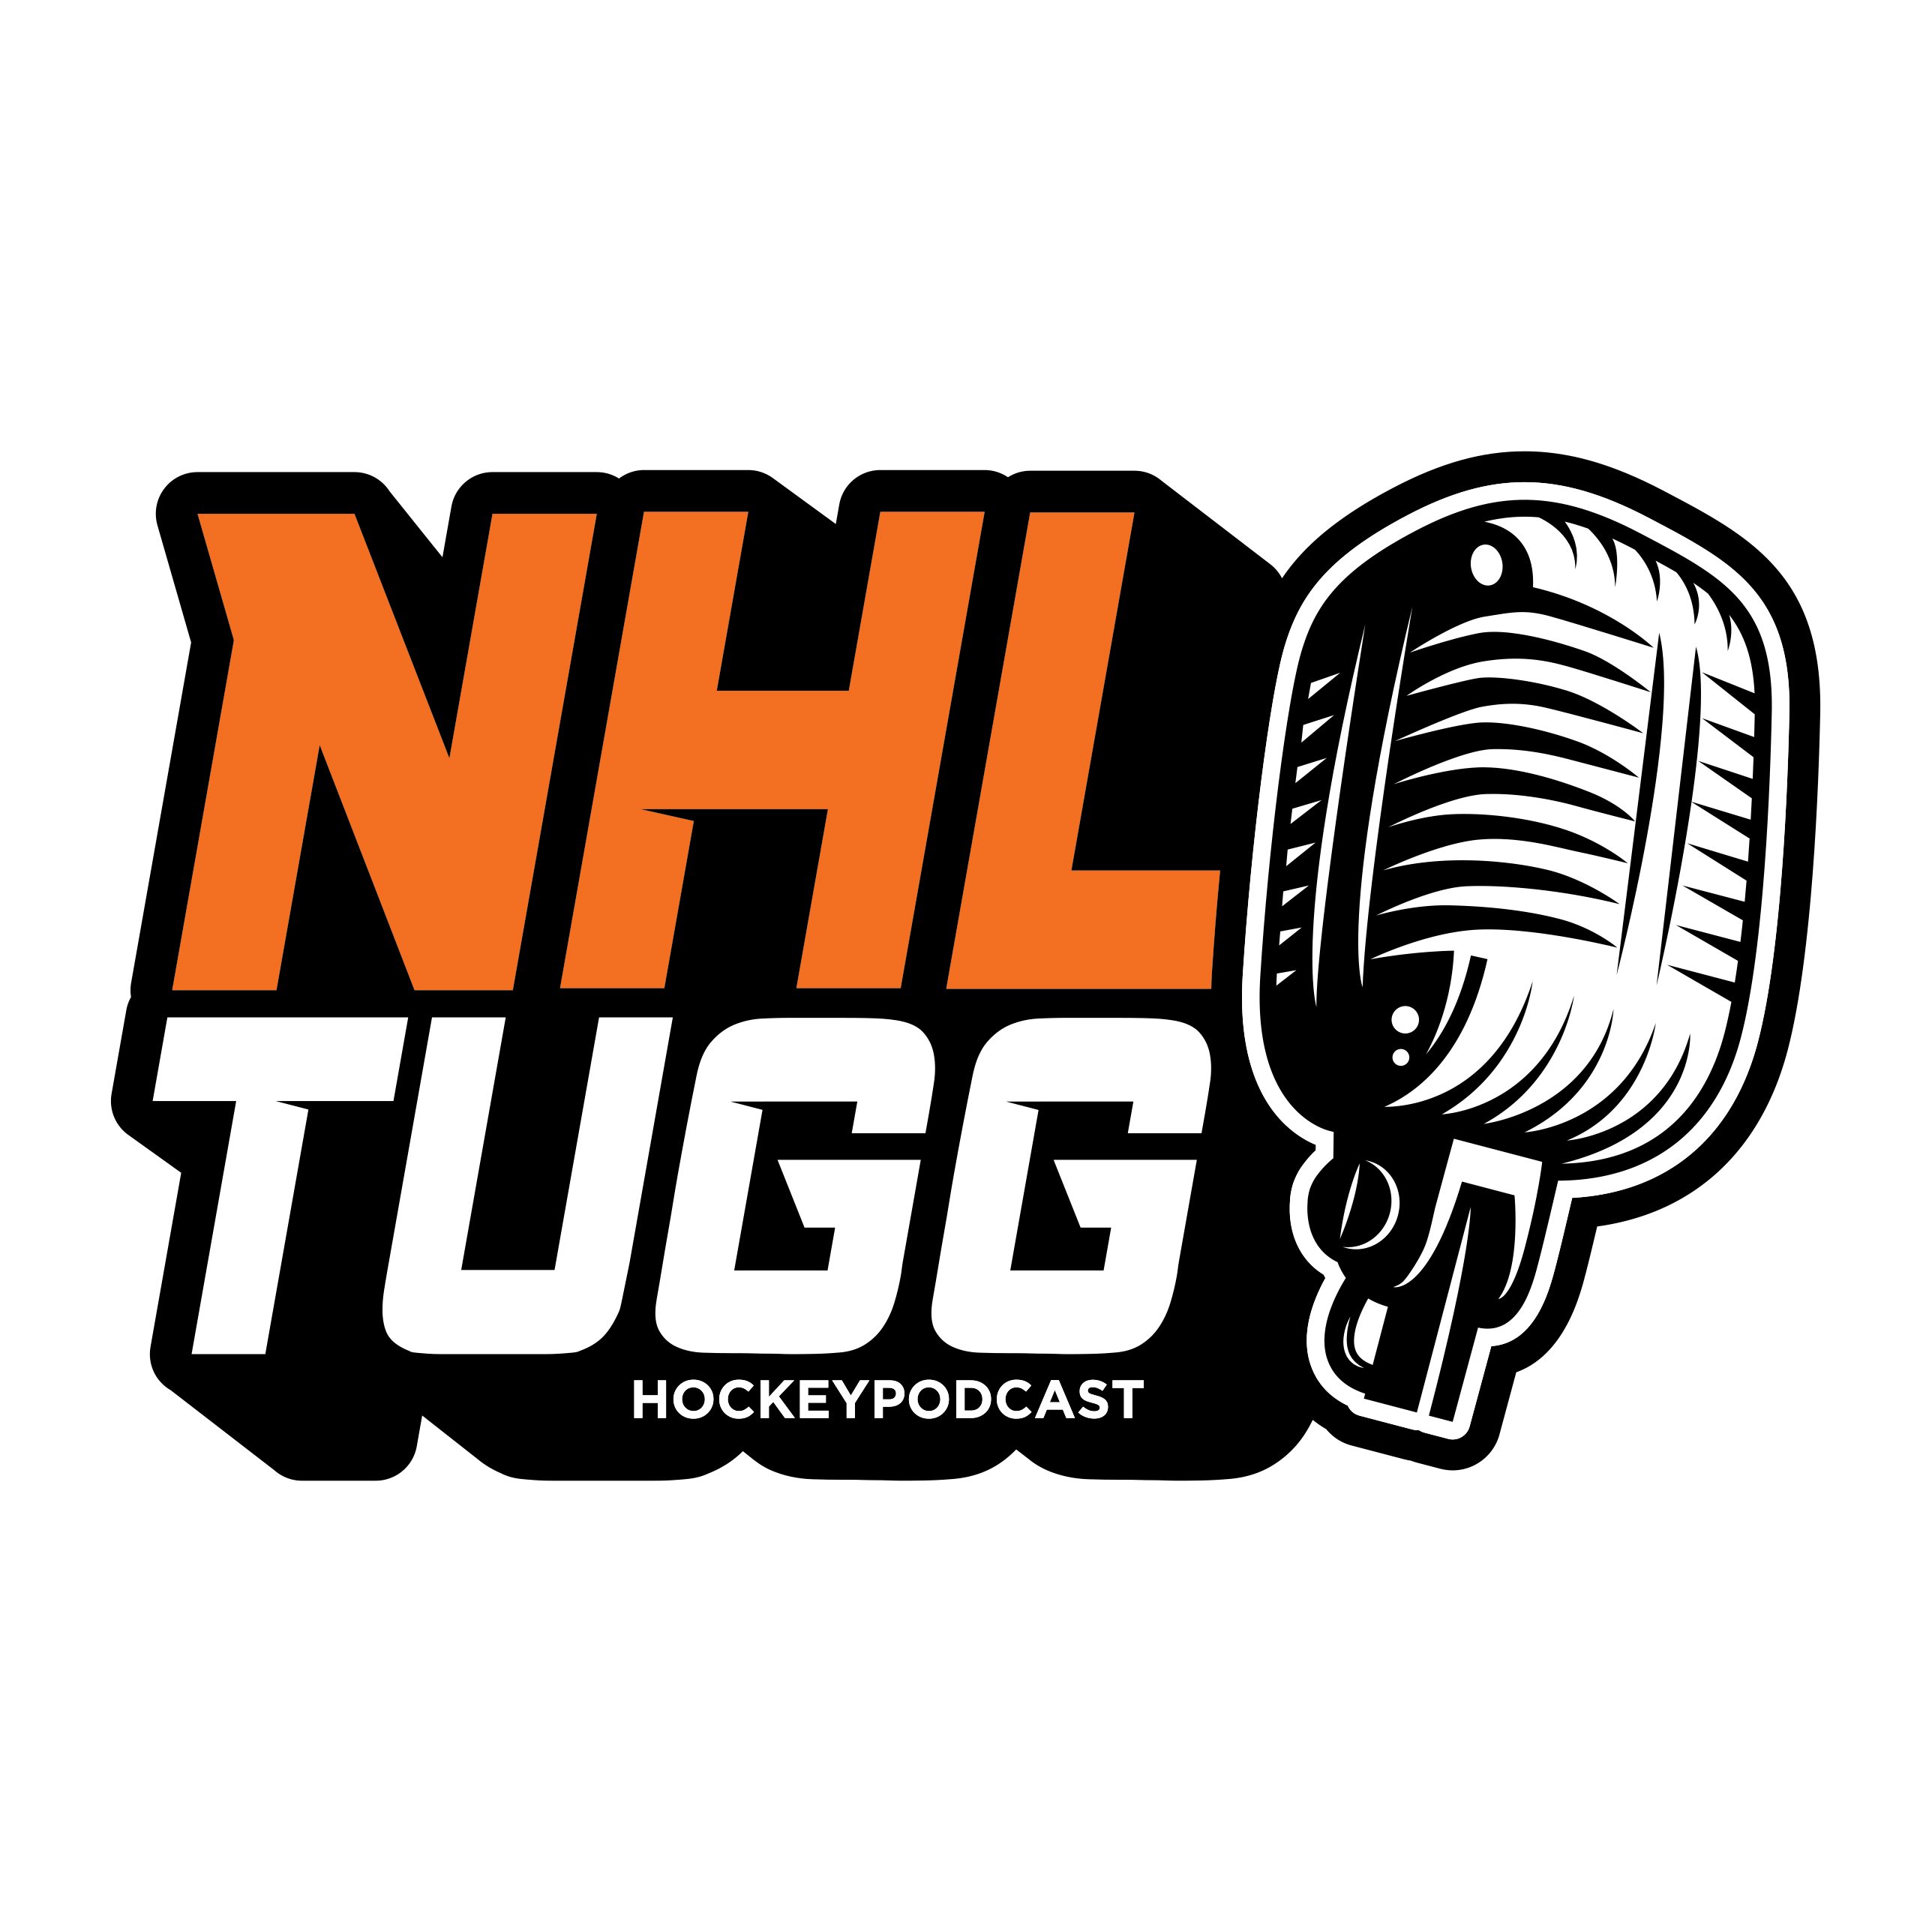 NHL-Tugg avsnitt 88 ”Re-draft 2008”